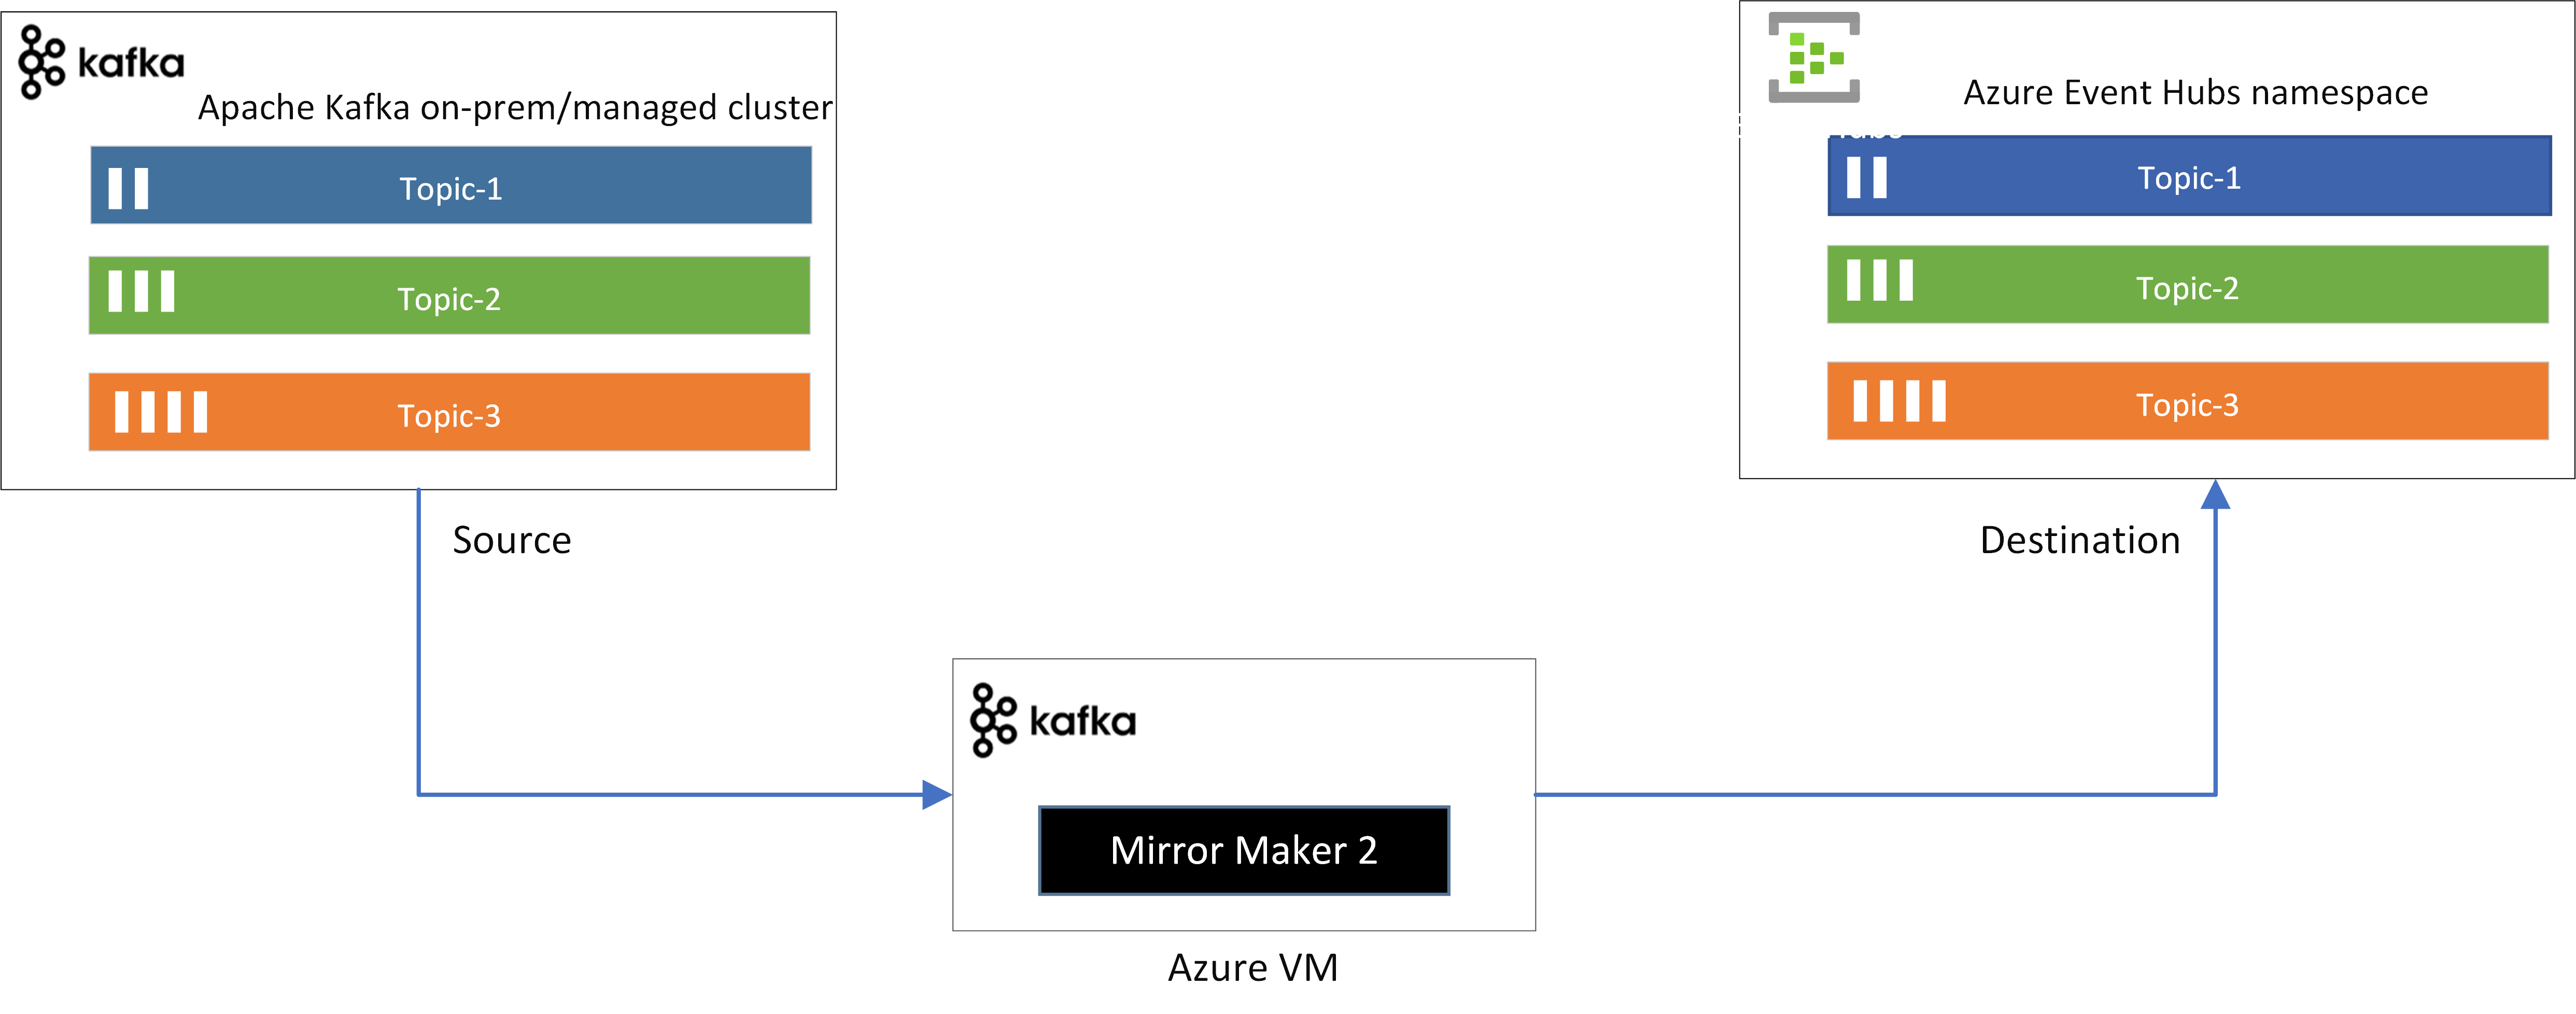 Gambar yang menunjukkan alur peristiwa dari Kafka MirrorMaker ke Azure Event Hubs.